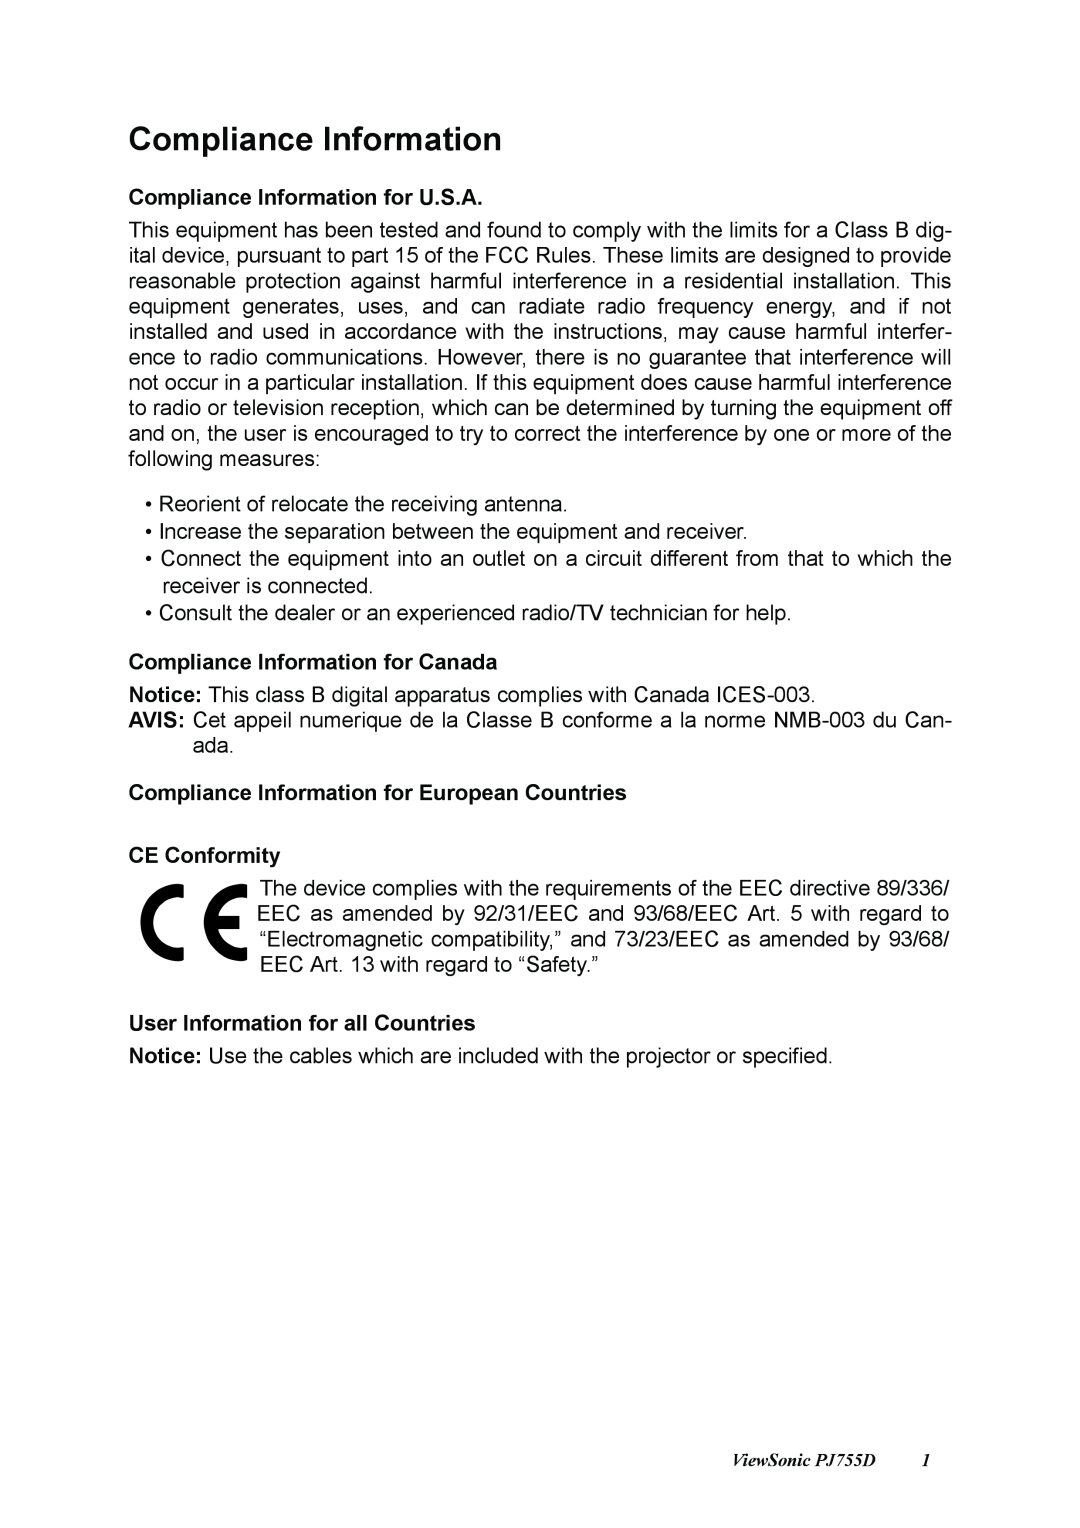 ViewSonic PJ755D manual Compliance Information for U.S.A, Compliance Information for Canada 